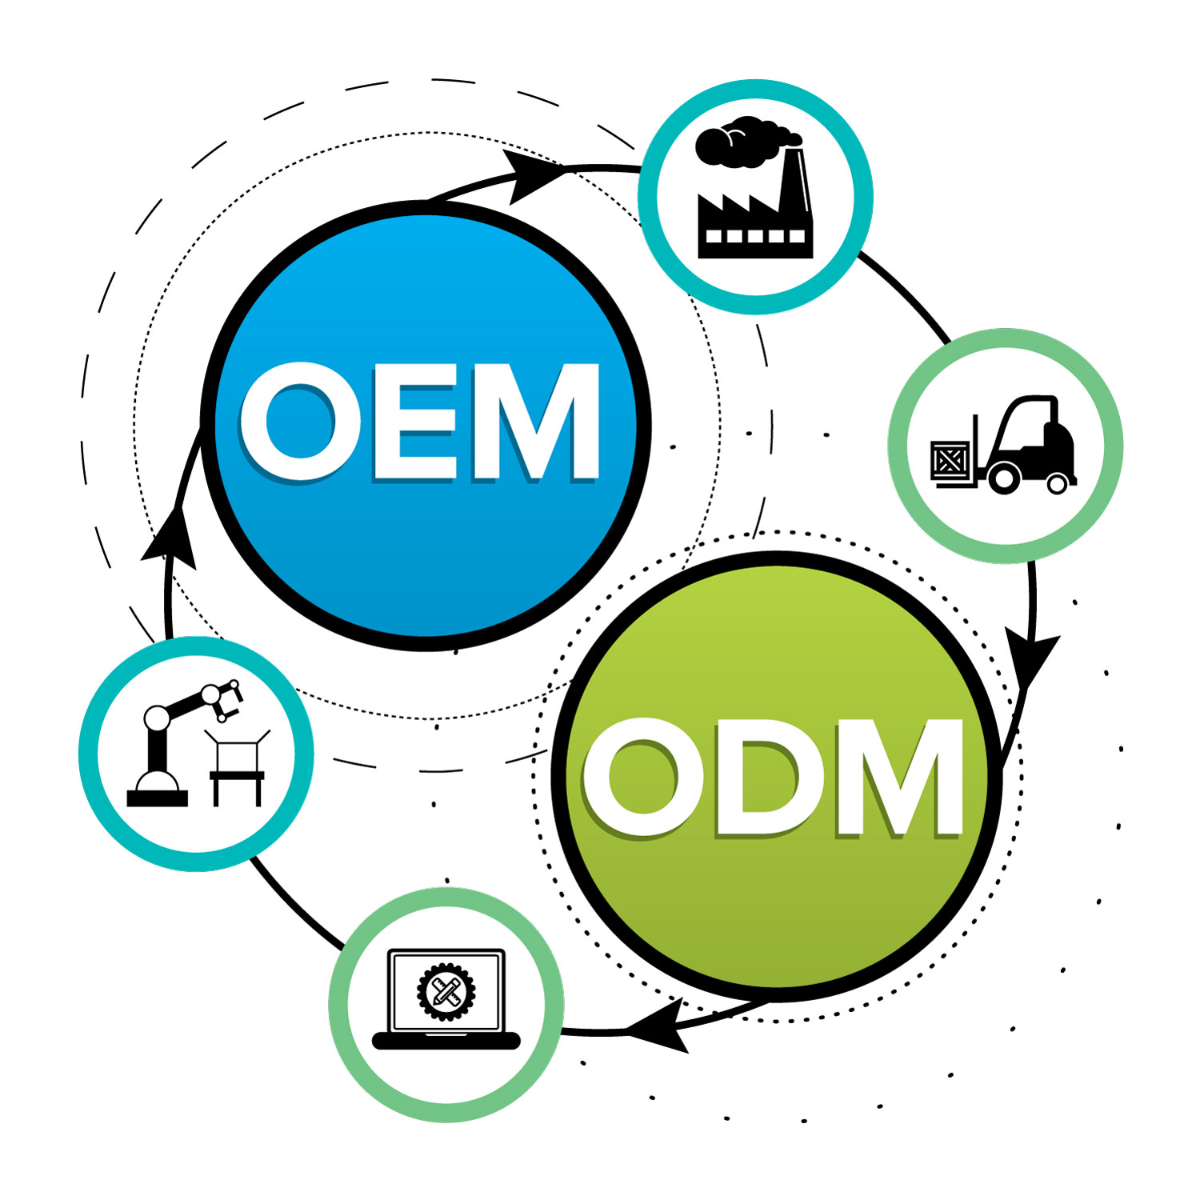 OEM_ODM_graphic